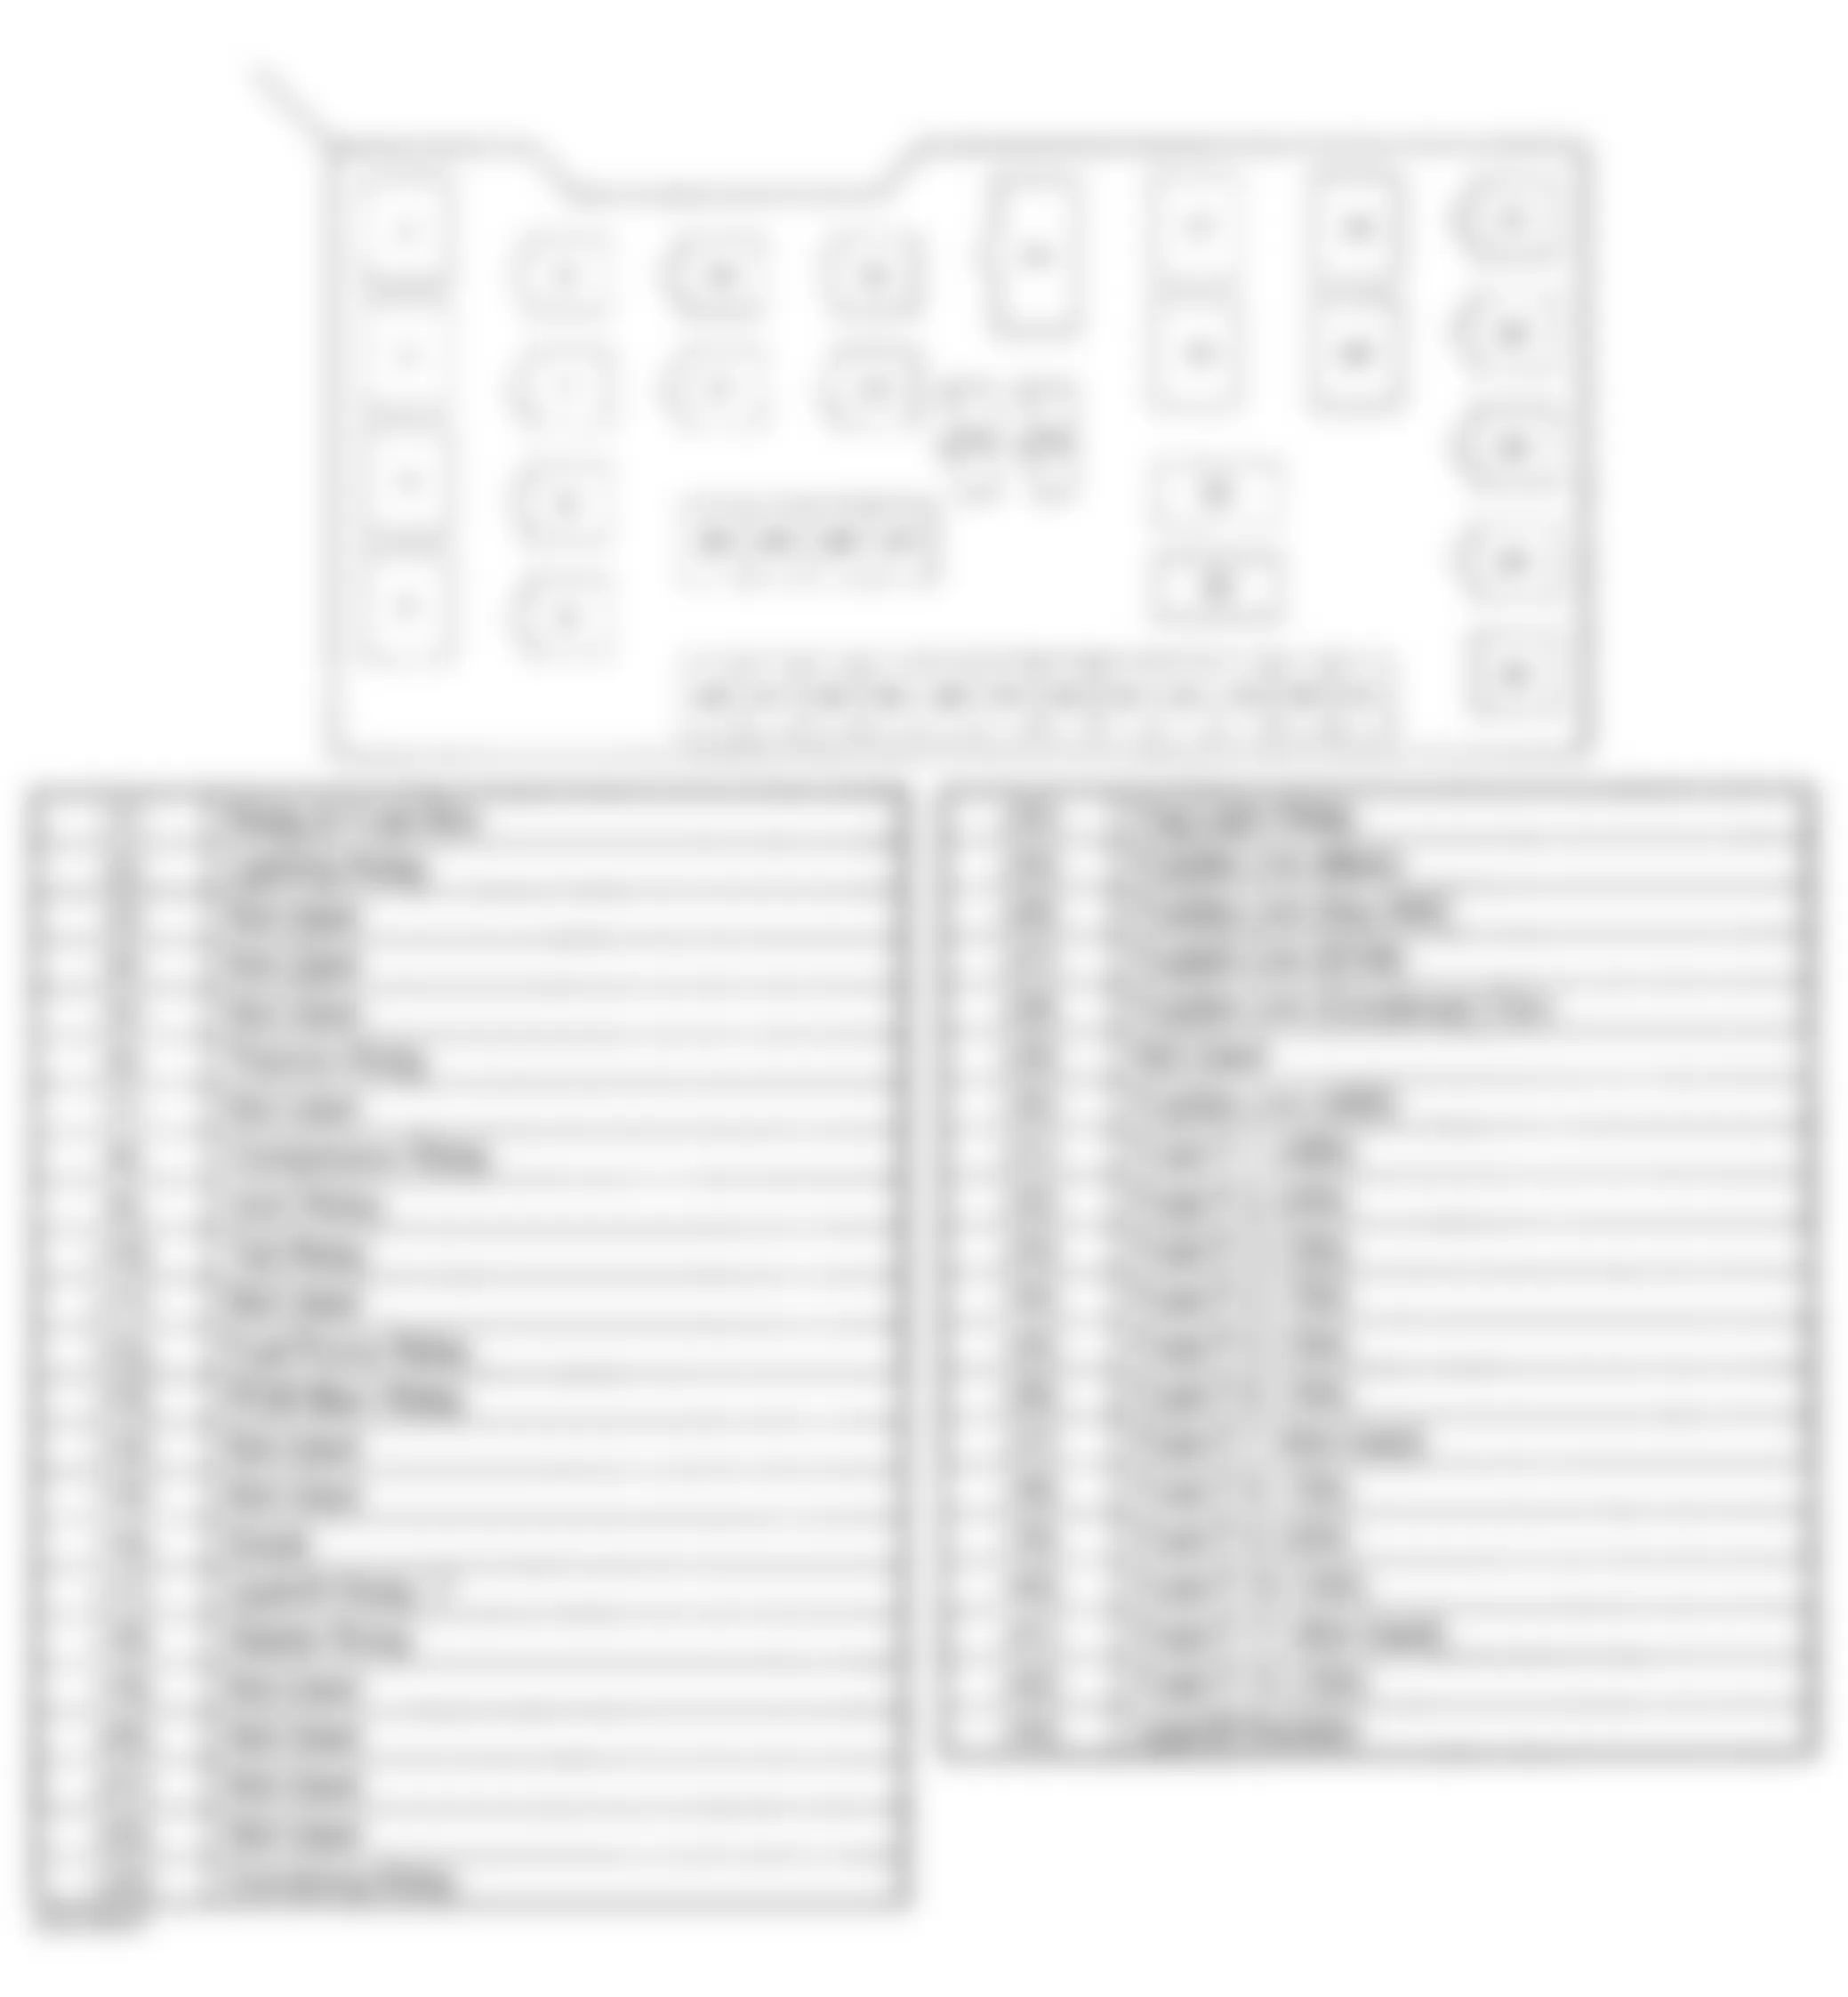 Isuzu Trooper S 2002 - Component Locations -  Identifying Relay & Fuse Box Component Identification